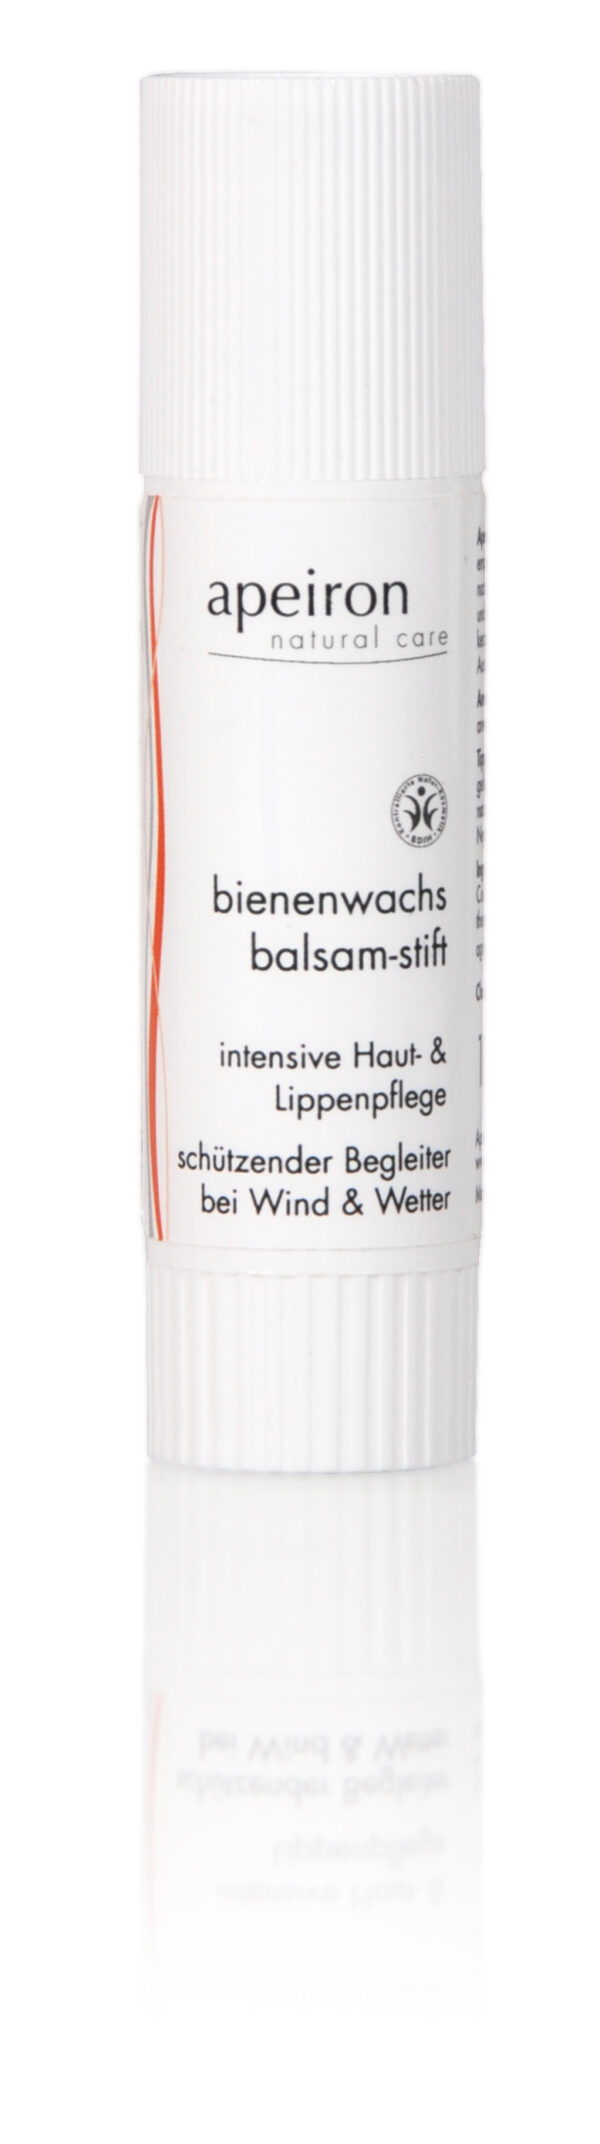 Apeiron Bienenwachs Balsamstift - intensive Haut- & Lippenpflege 12 x 10ml ***